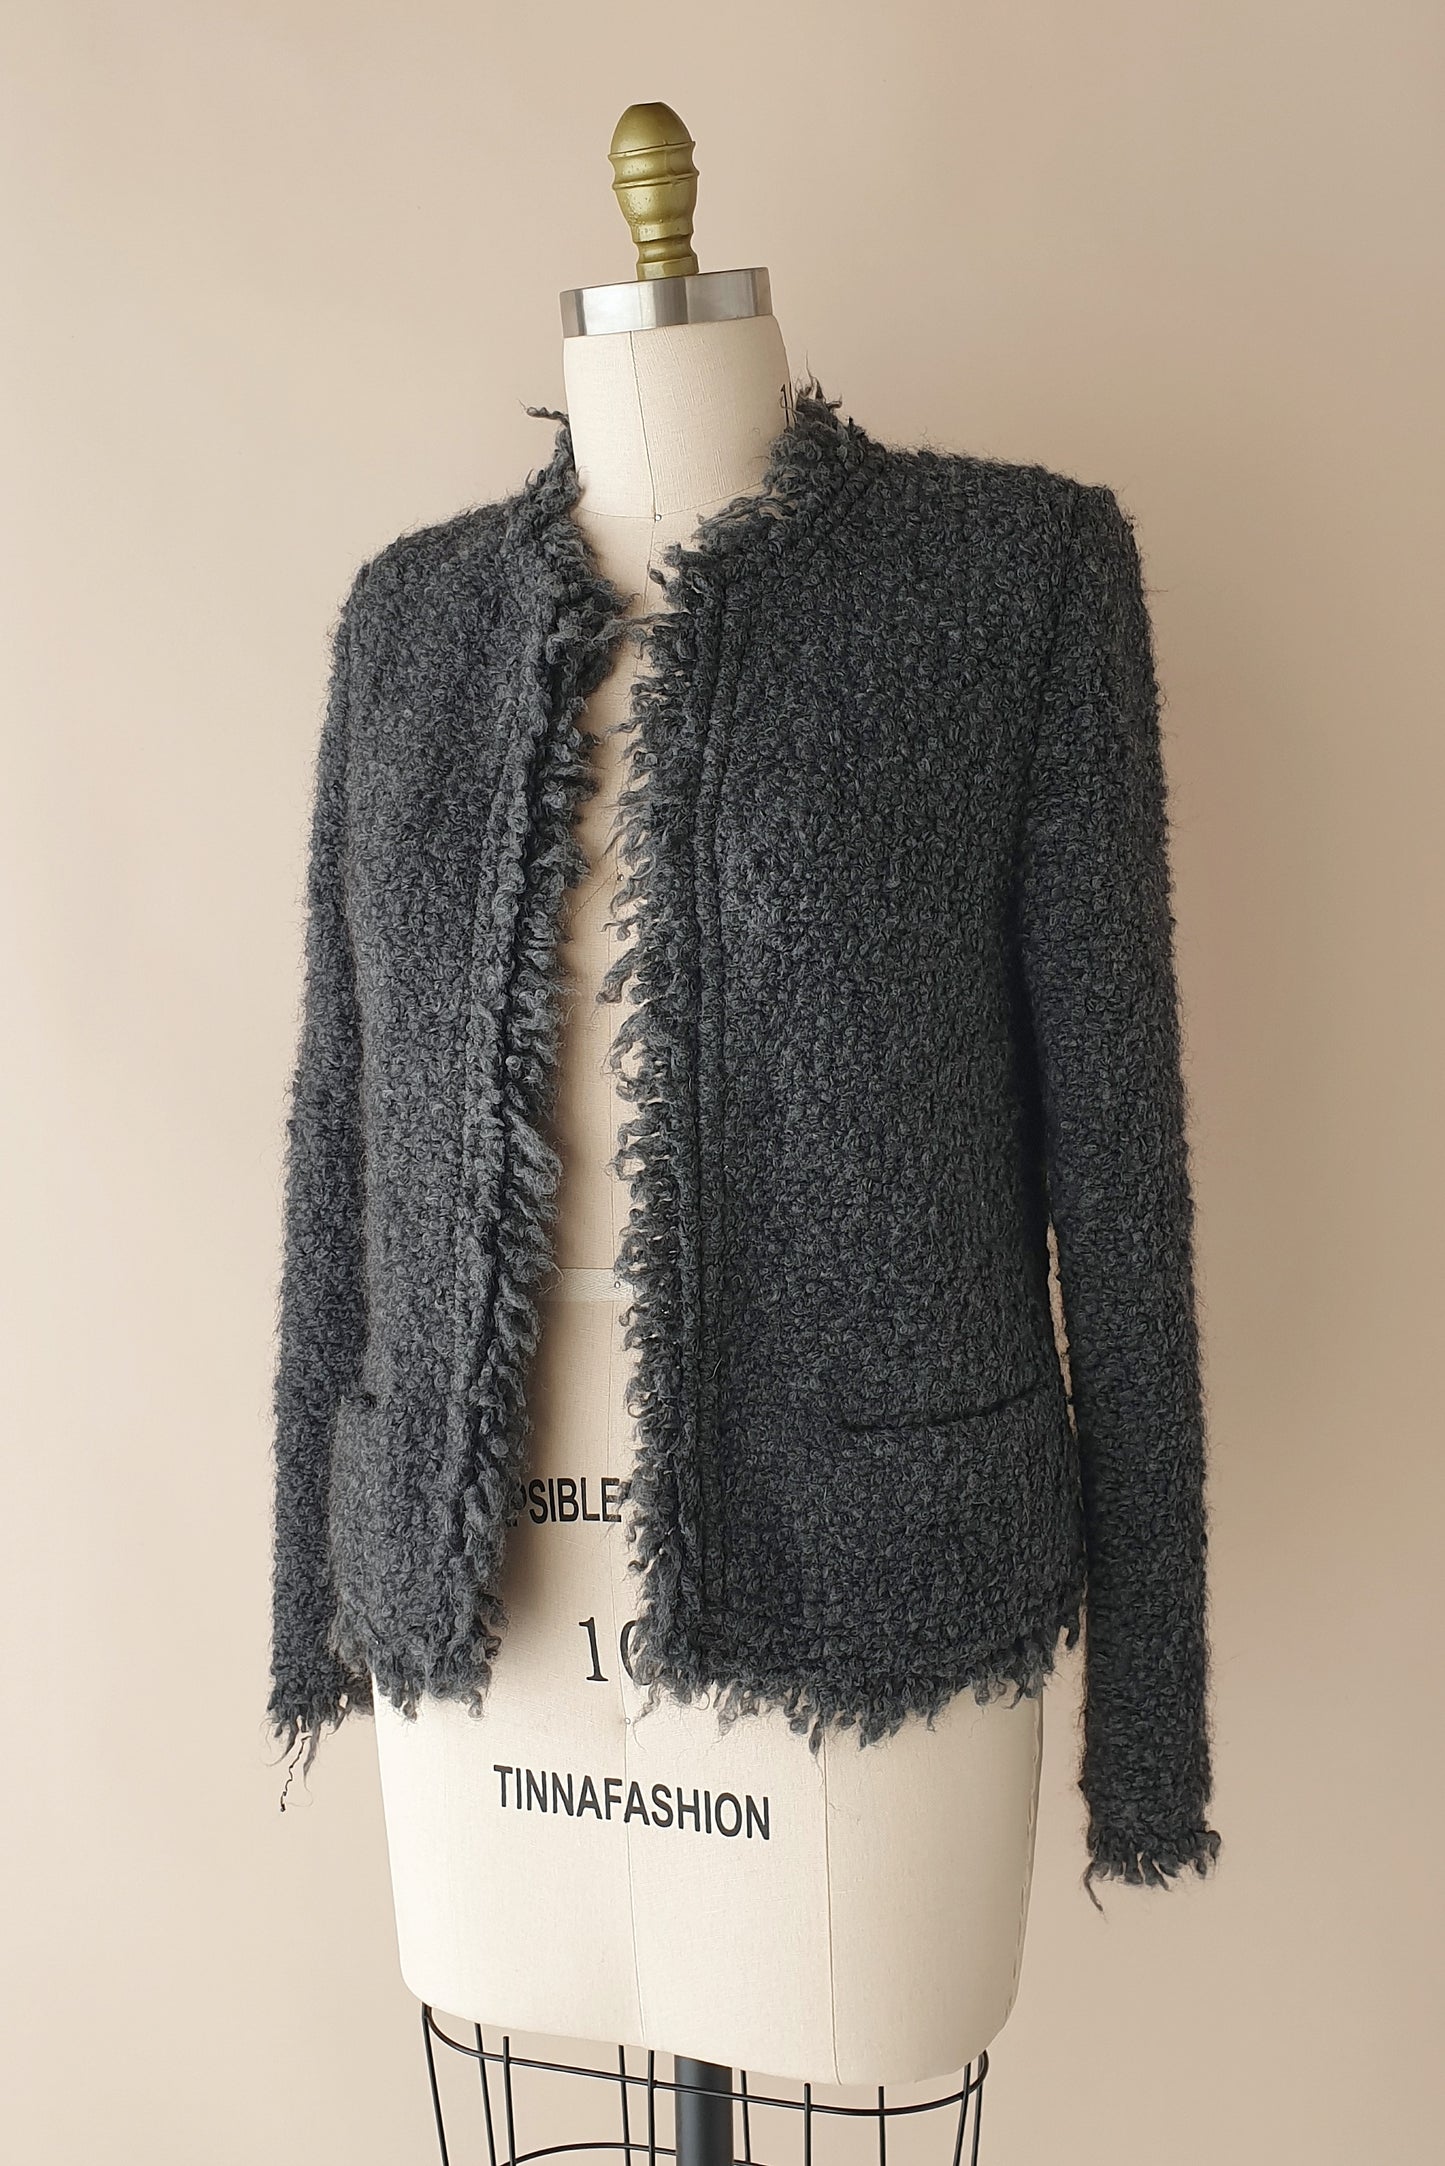 Stunning wool blend boucle jacket from IRO Size S